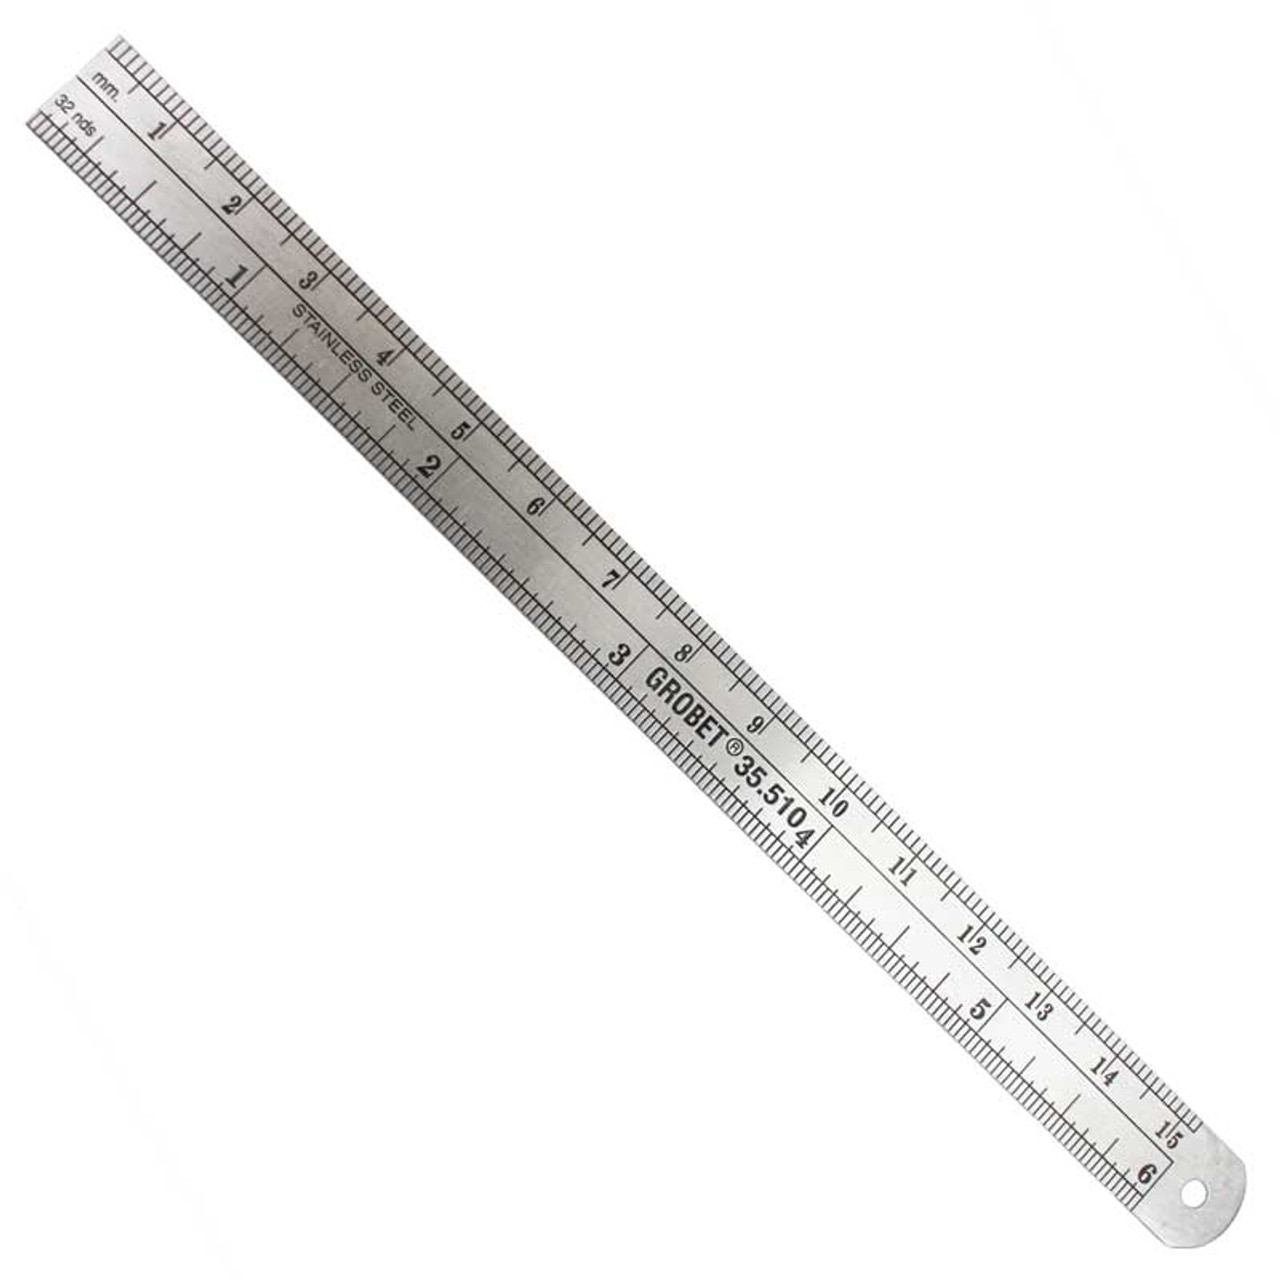 Millimeter Ruler and Inches Stainless Steel Flexible Ruler 6 inch 150mm | Esslinger